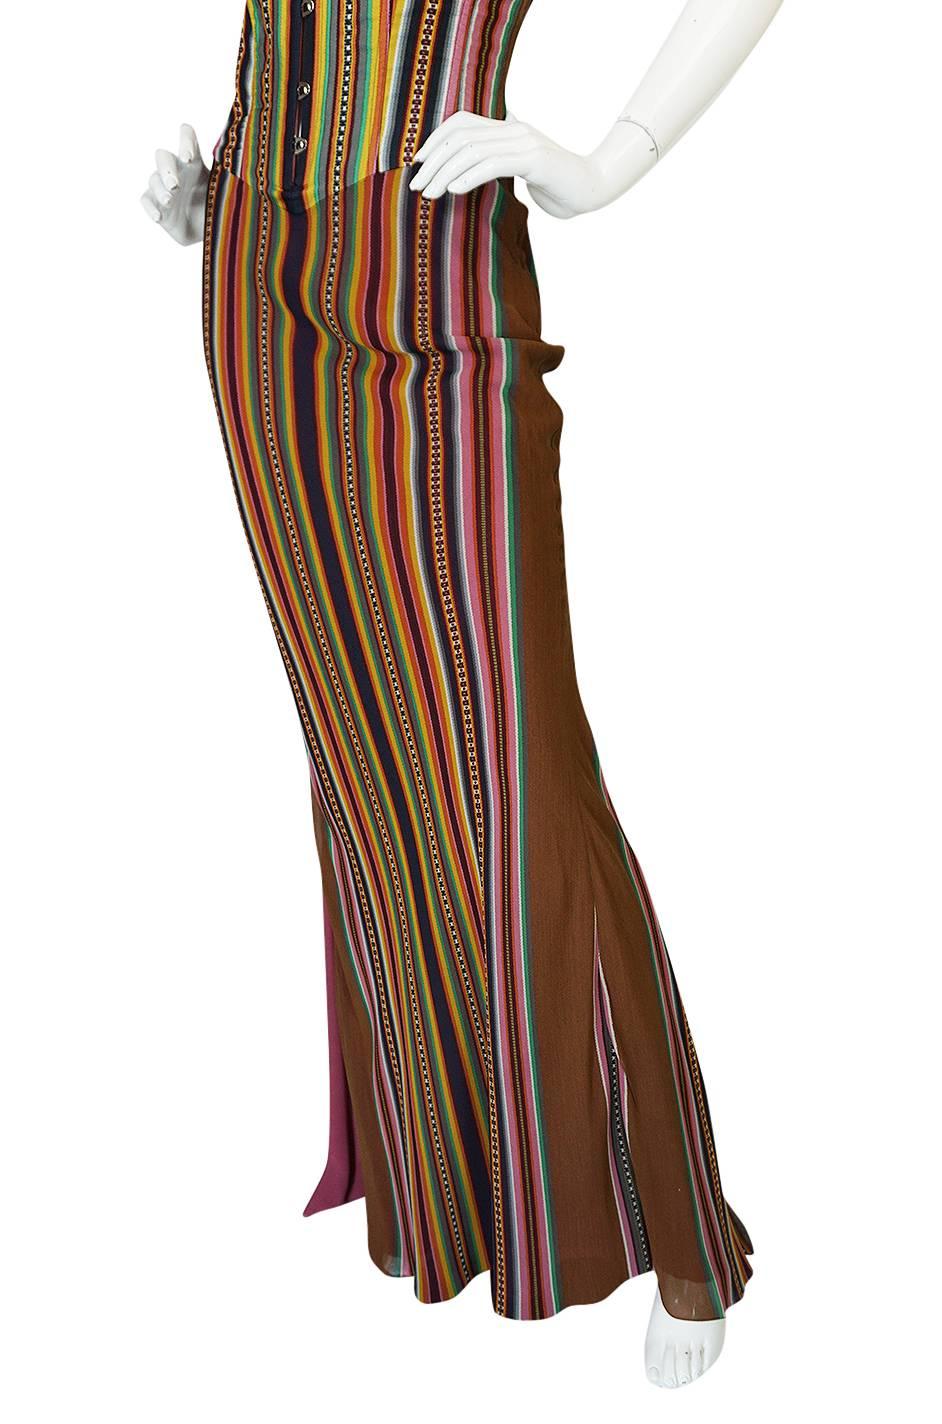 S/S 2002 Galliano for Christian Dior Striped Corset Dress 3